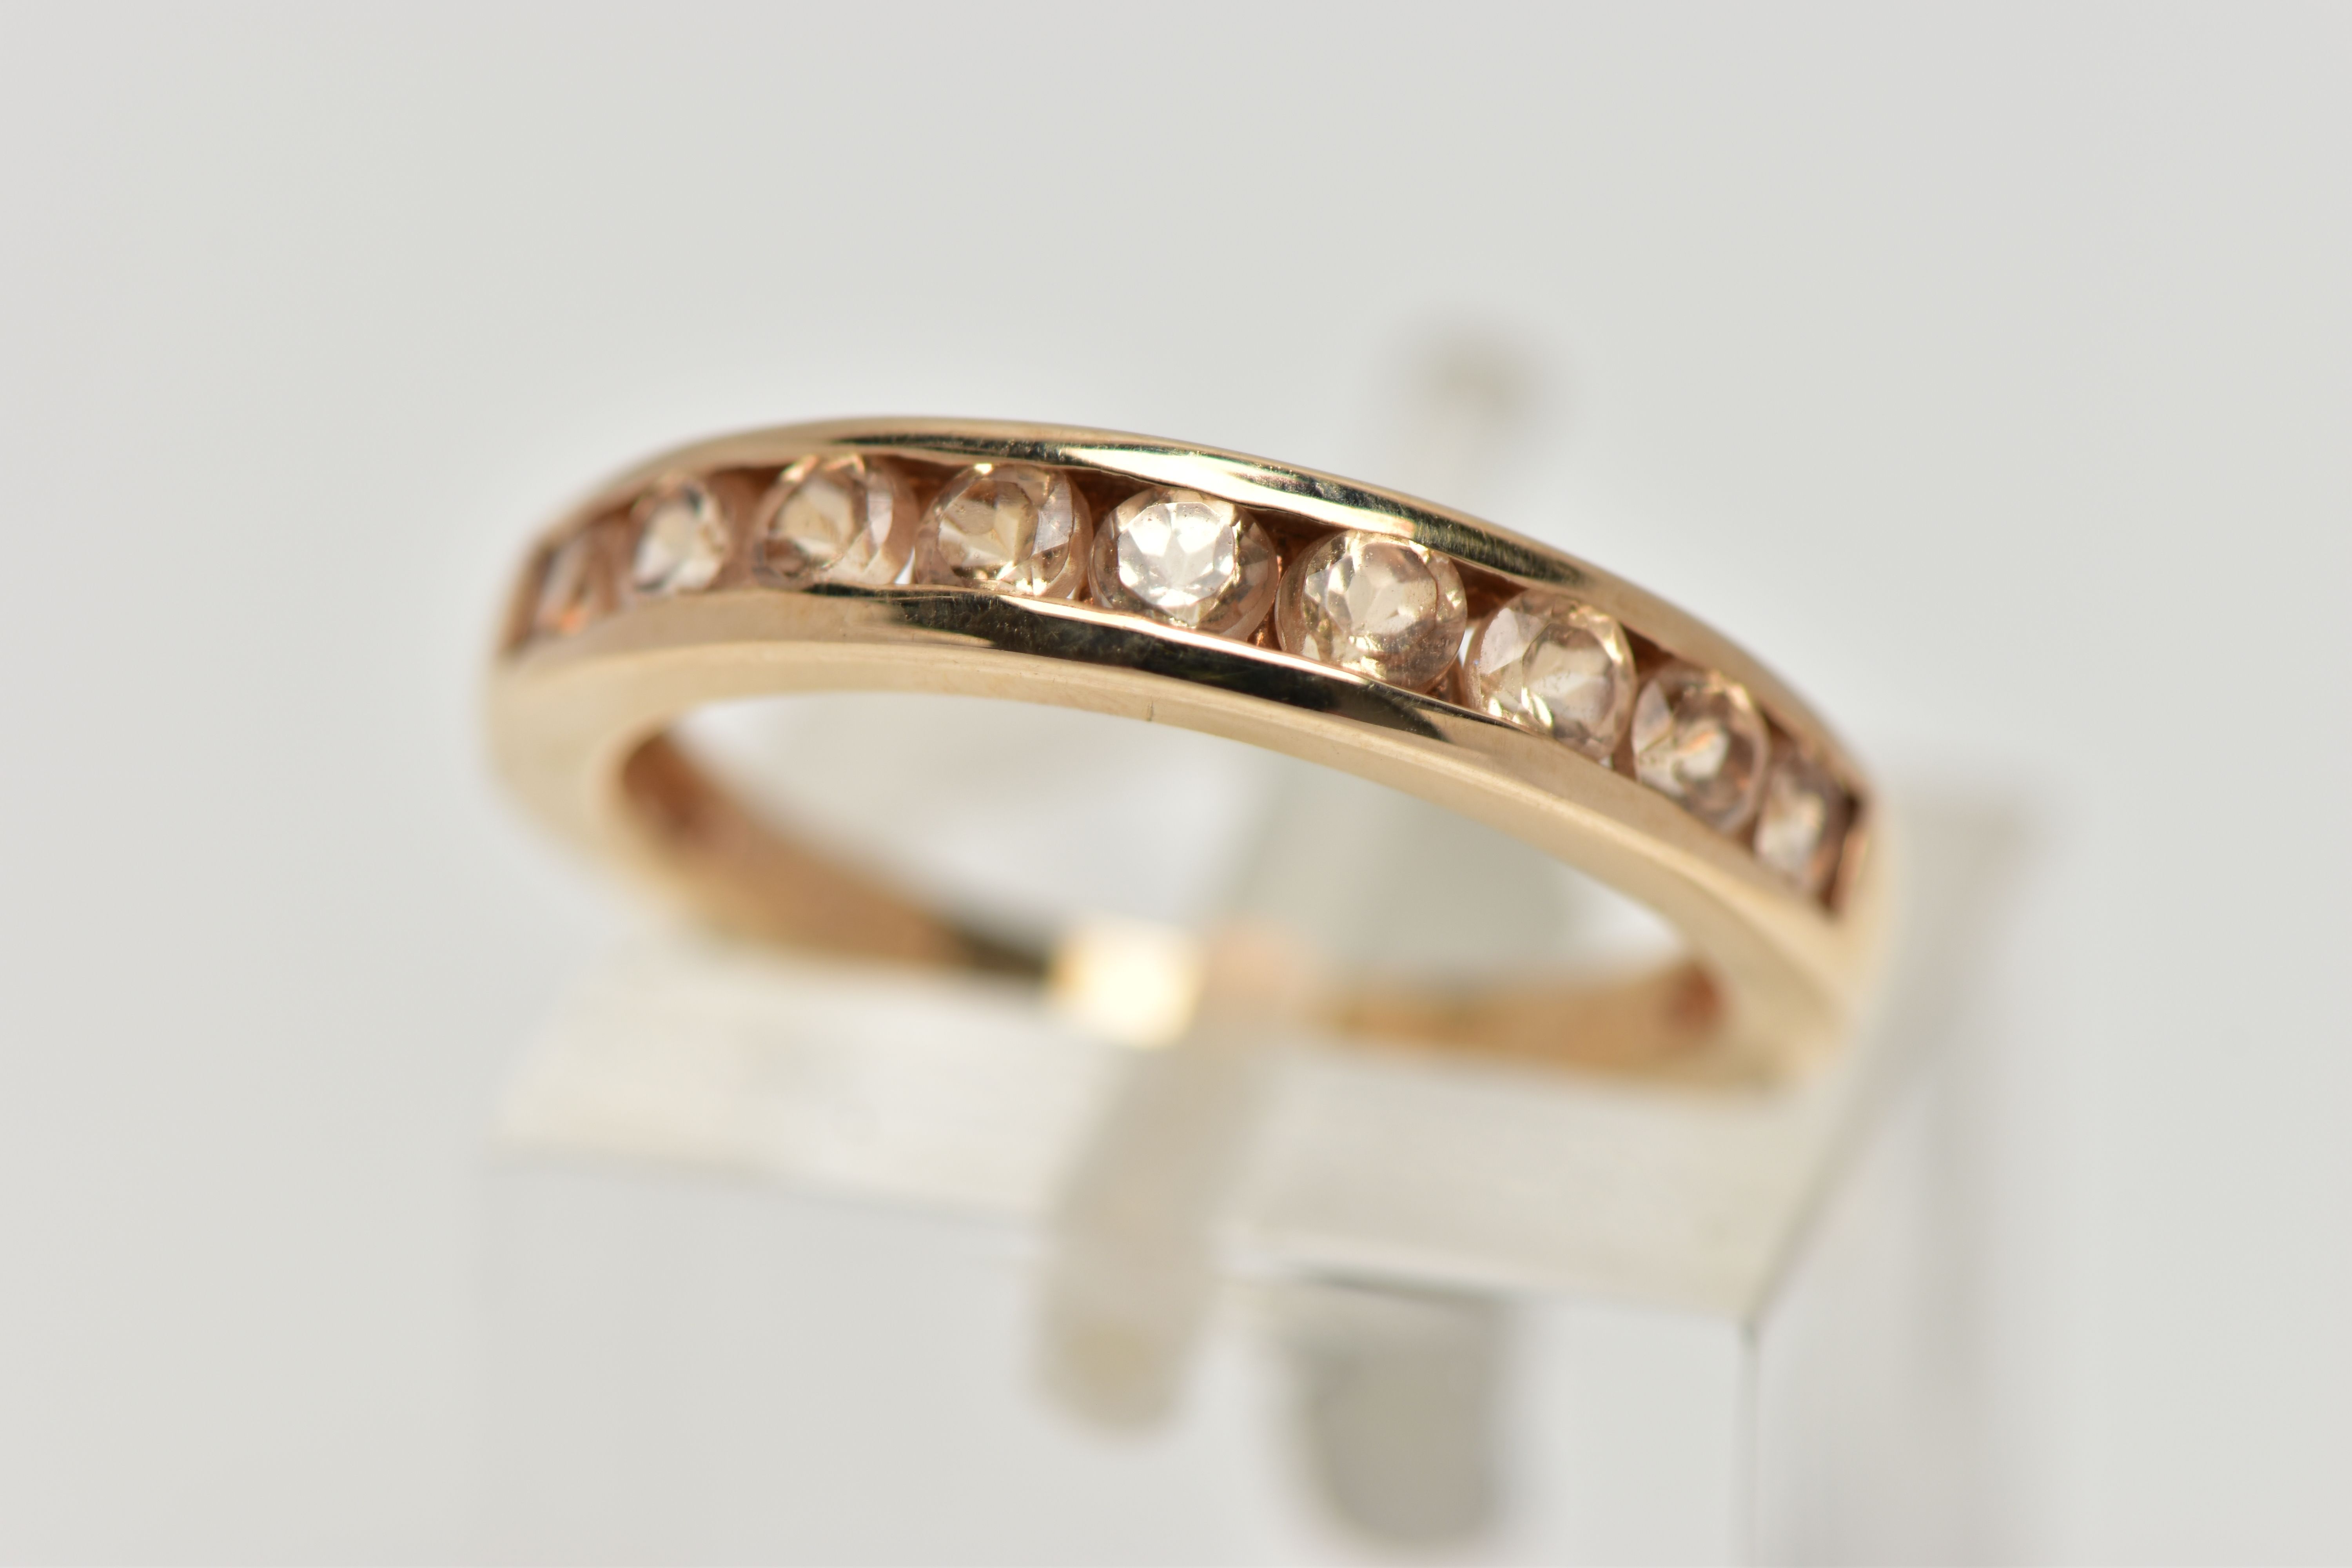 A 9CT GOLD GEM SET HALF ETERNITY RING, the circular shape peachy colour gems assessed as tourmaline,